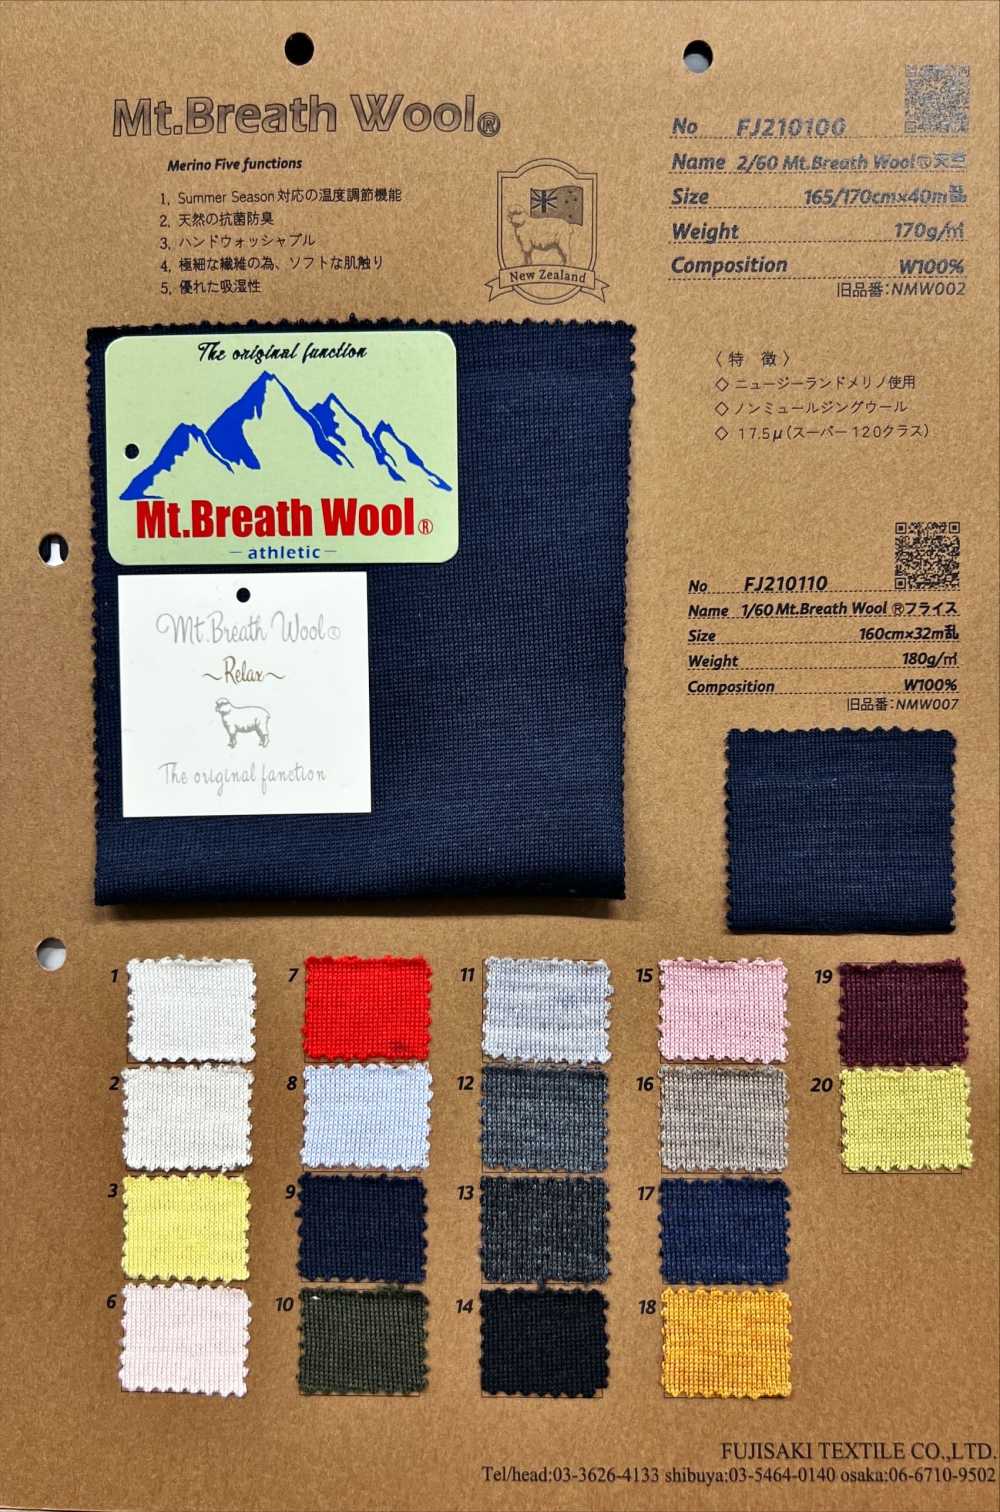 FJ210100 2/60 Mt.Breath Wool 싱글 다이마루[원단] Fujisaki Textile